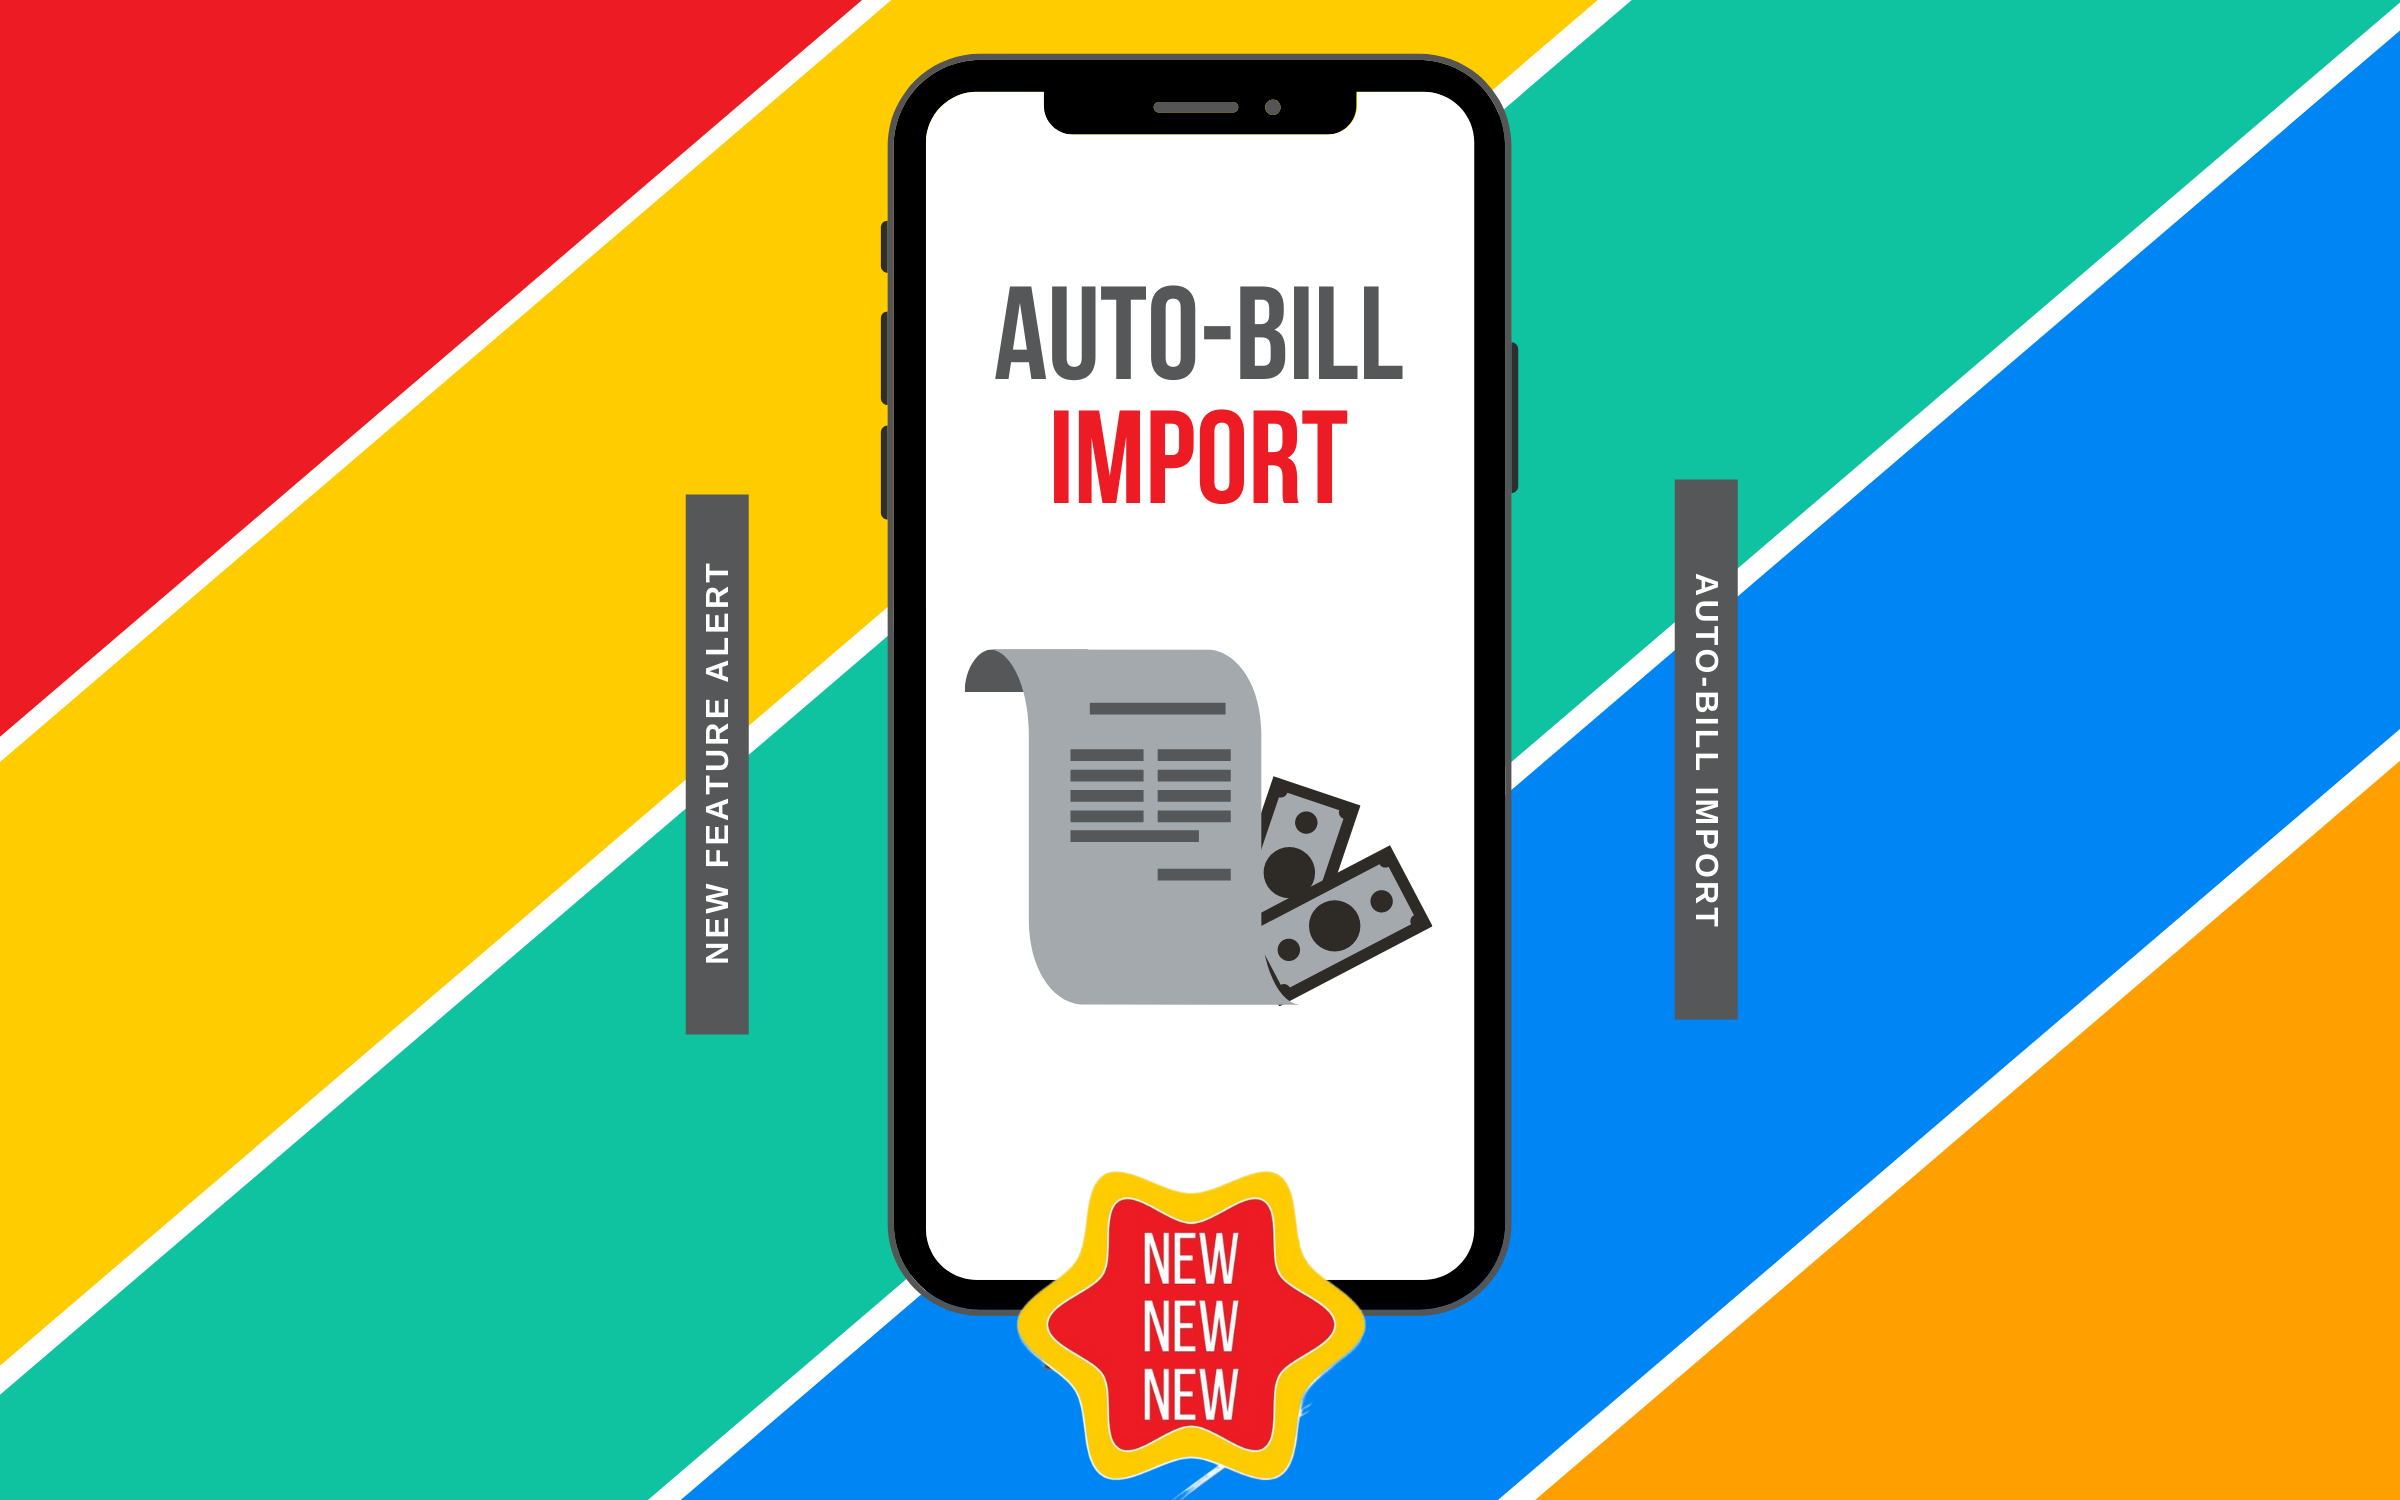 New Feature Alert: Auto-bill Import